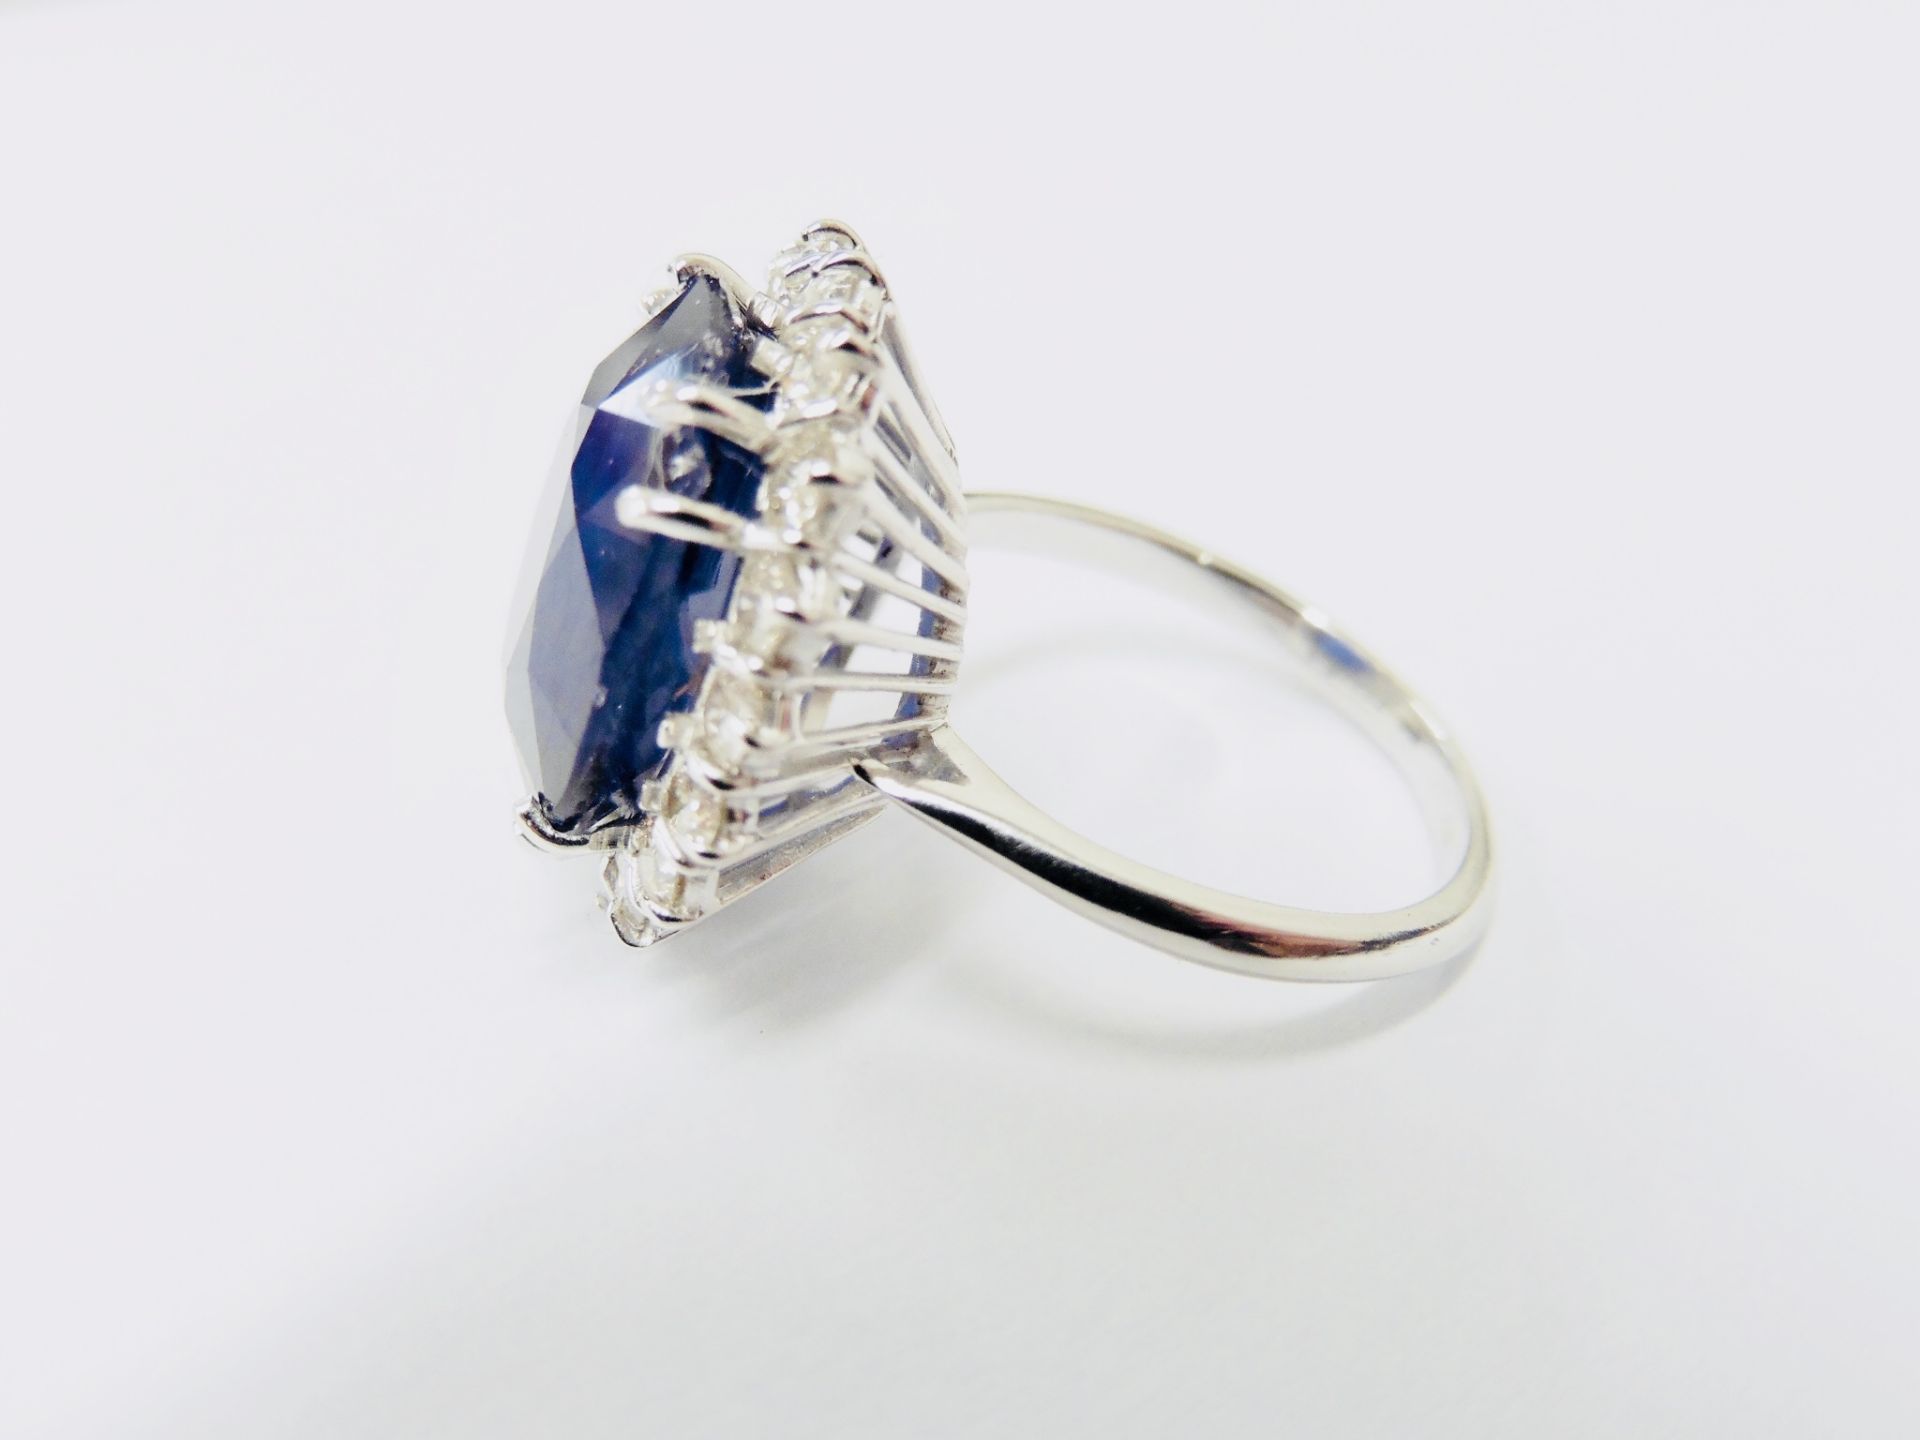 9ct Sapphire Diamond cluster ring,9ct sapphire natural(treated),1.30ct brilliant cut diamonds si2 - Image 4 of 6